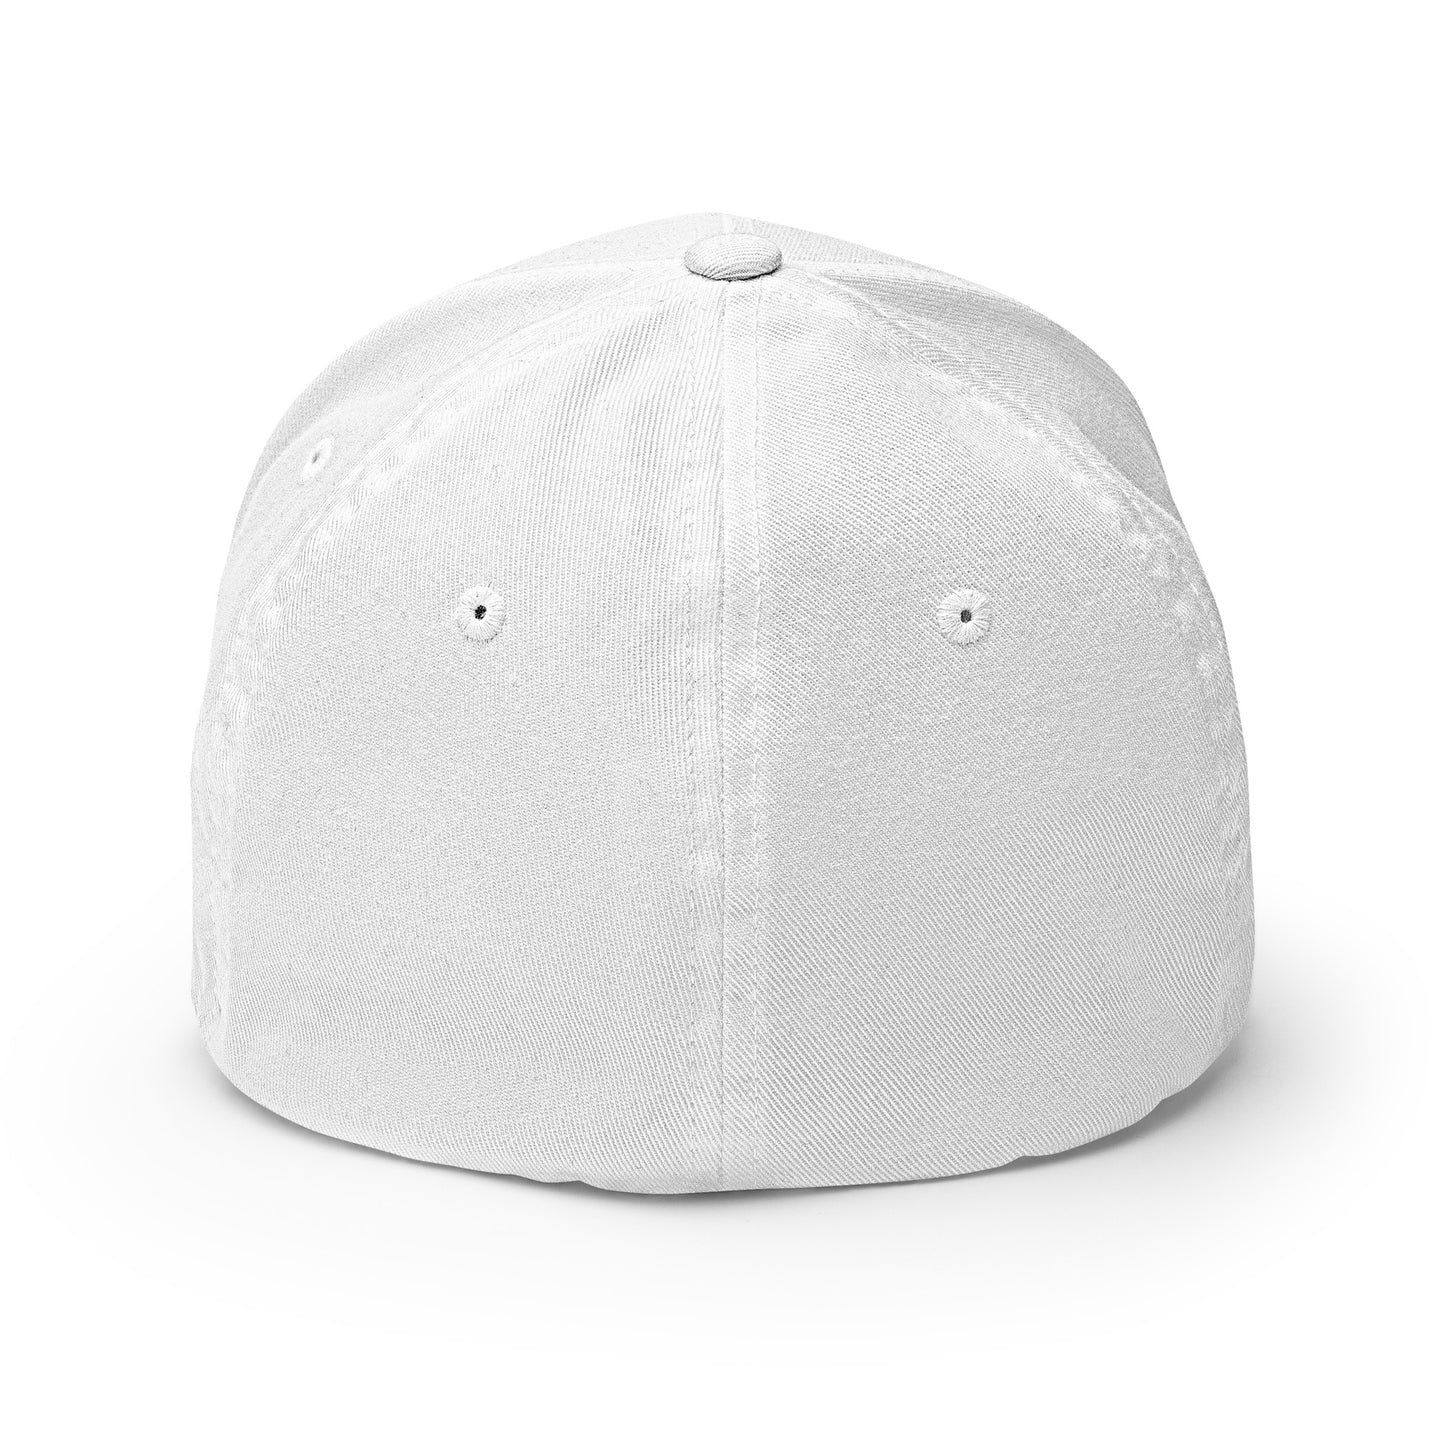 Baseball Cap with Aries Symbol